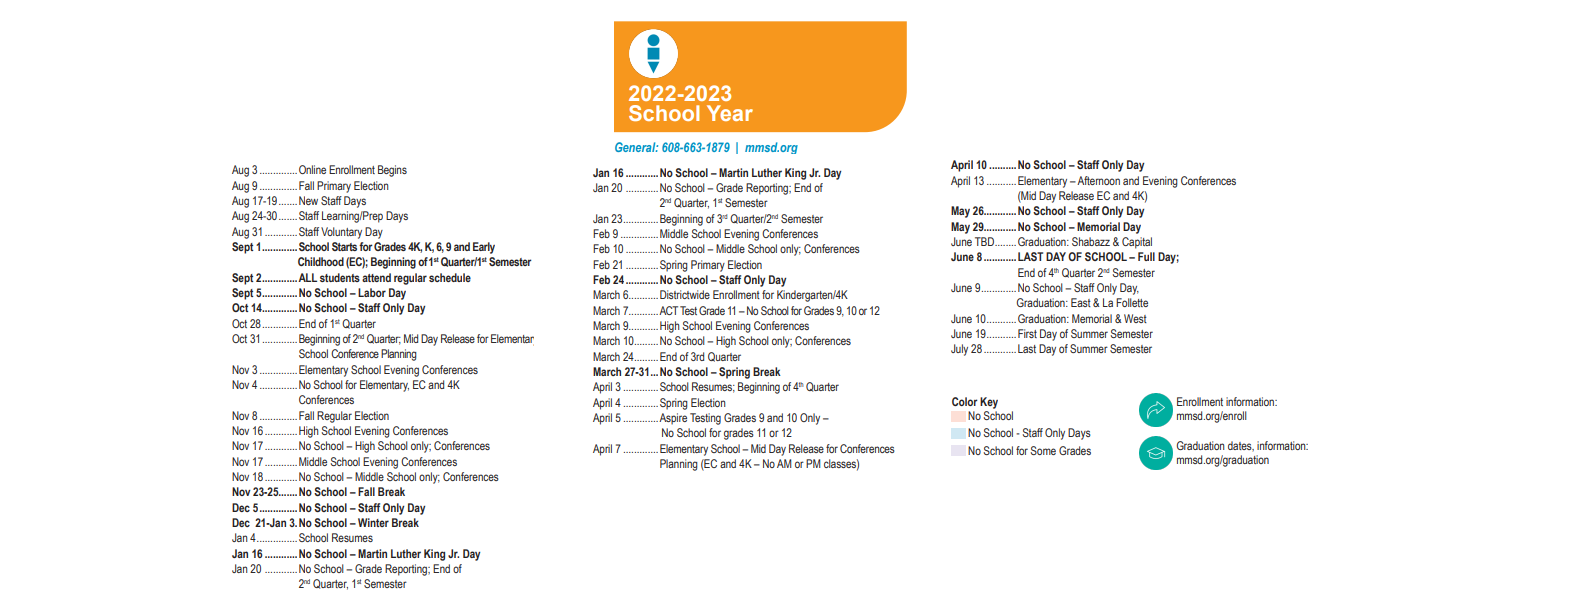 District School Academic Calendar Key for Allis Elementary